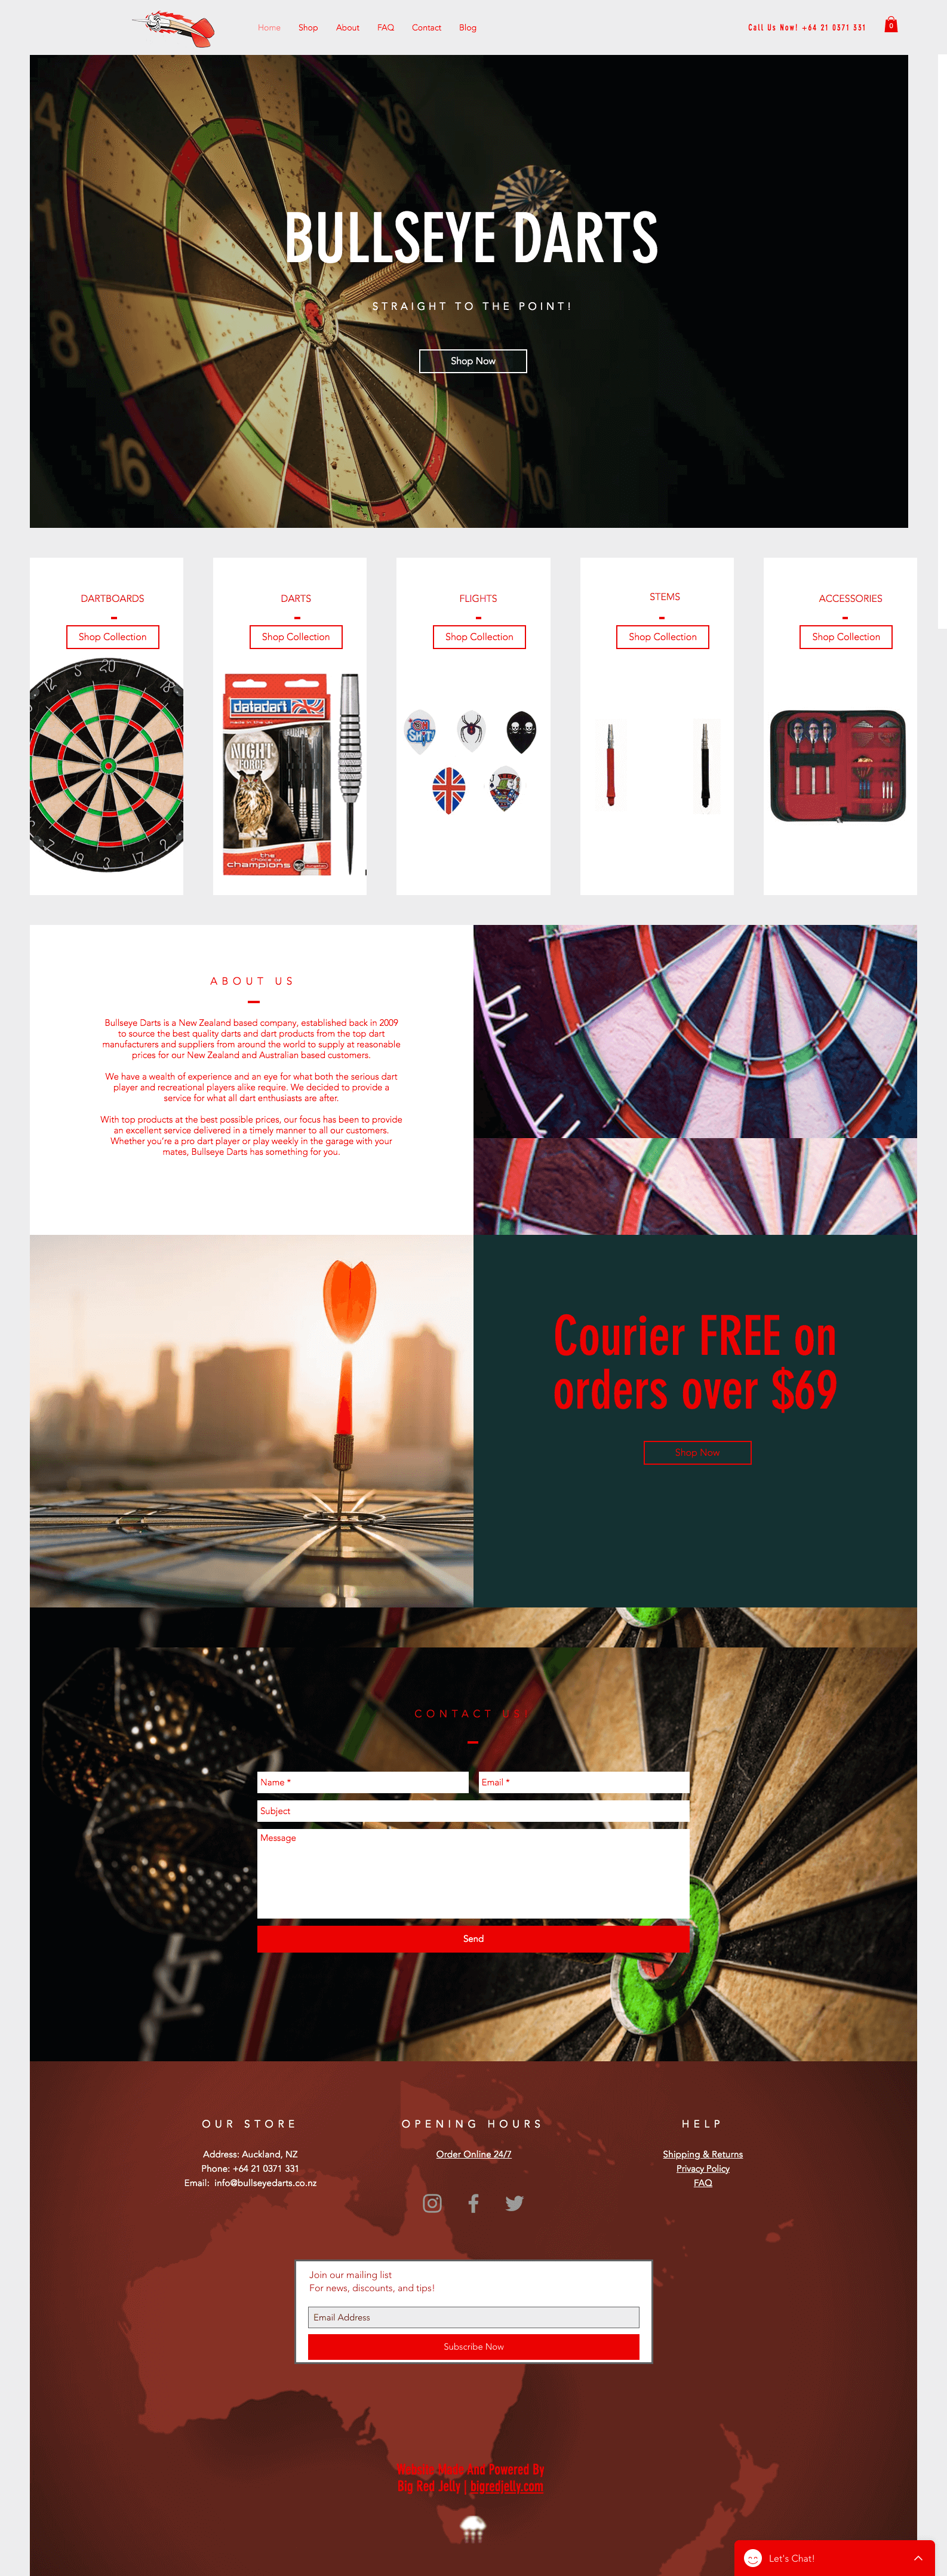 Bullseye darts full website design - brand building at Big Red Jelly.